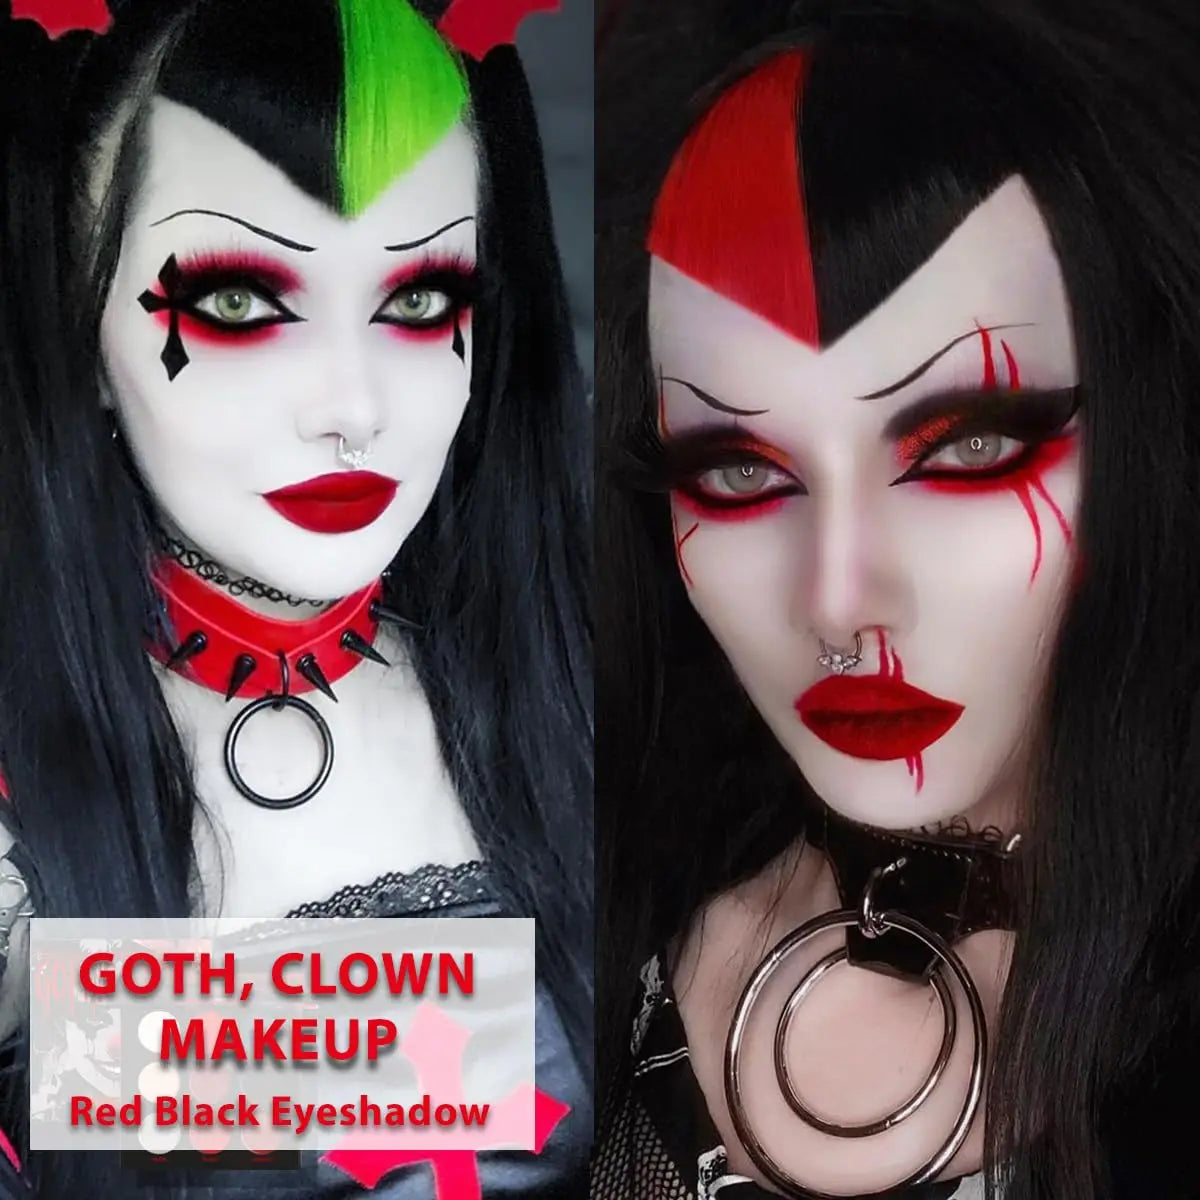 Black Red Eyeshadow Palette Goth Clown Halloween Makeup, White Silver Glitter Metallic Red Black Eyeshadow Palette Joker Zombie